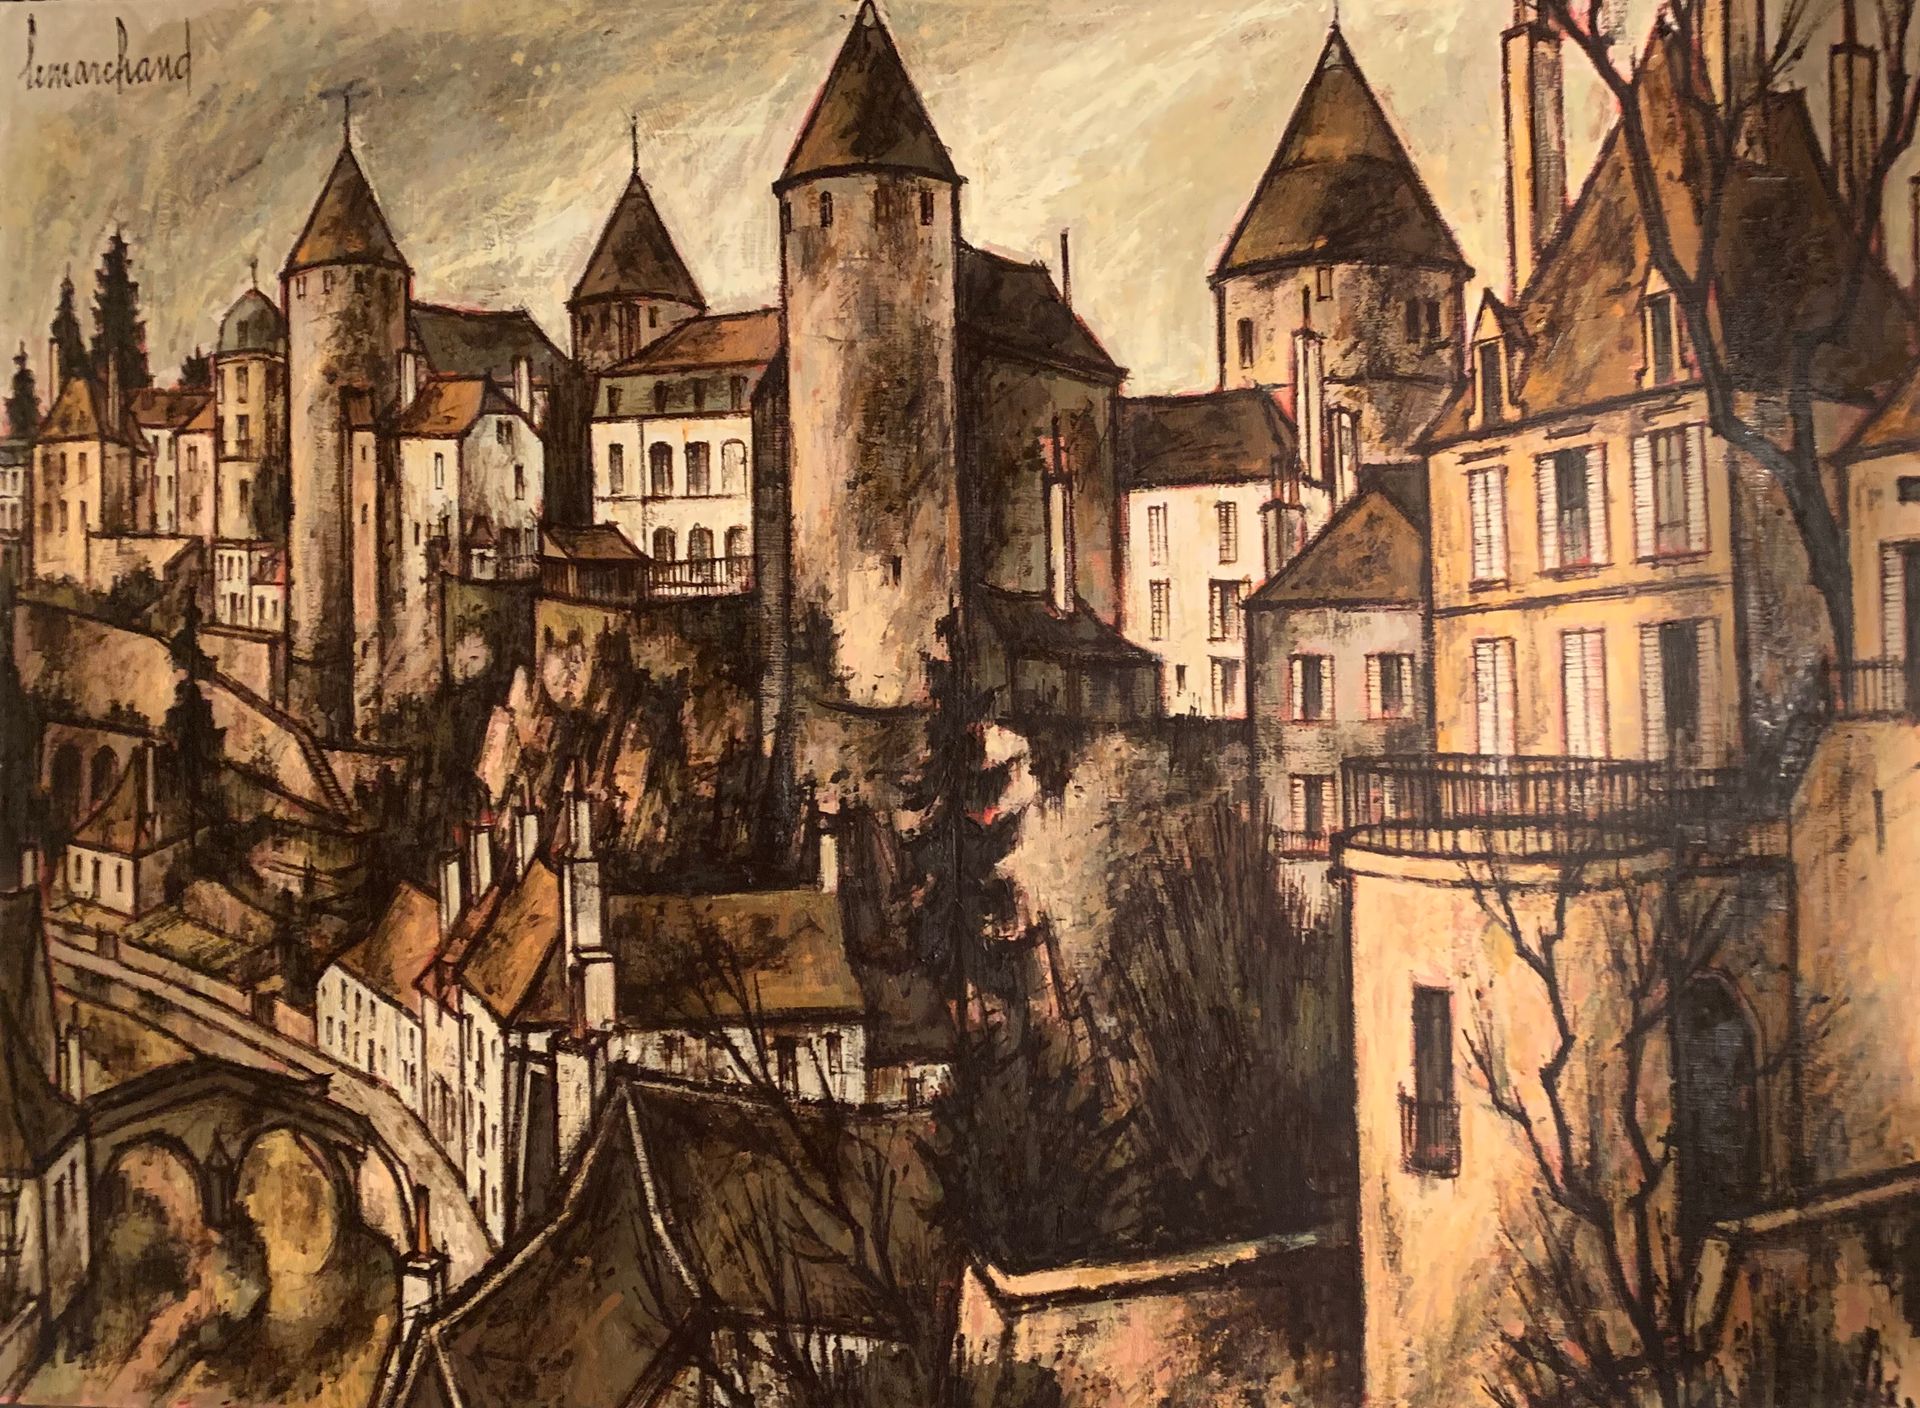 Null 皮埃尔-莱马赫德 (1906-1970)

强化的城市

布面油画，左上角有签名

97 x 130厘米。